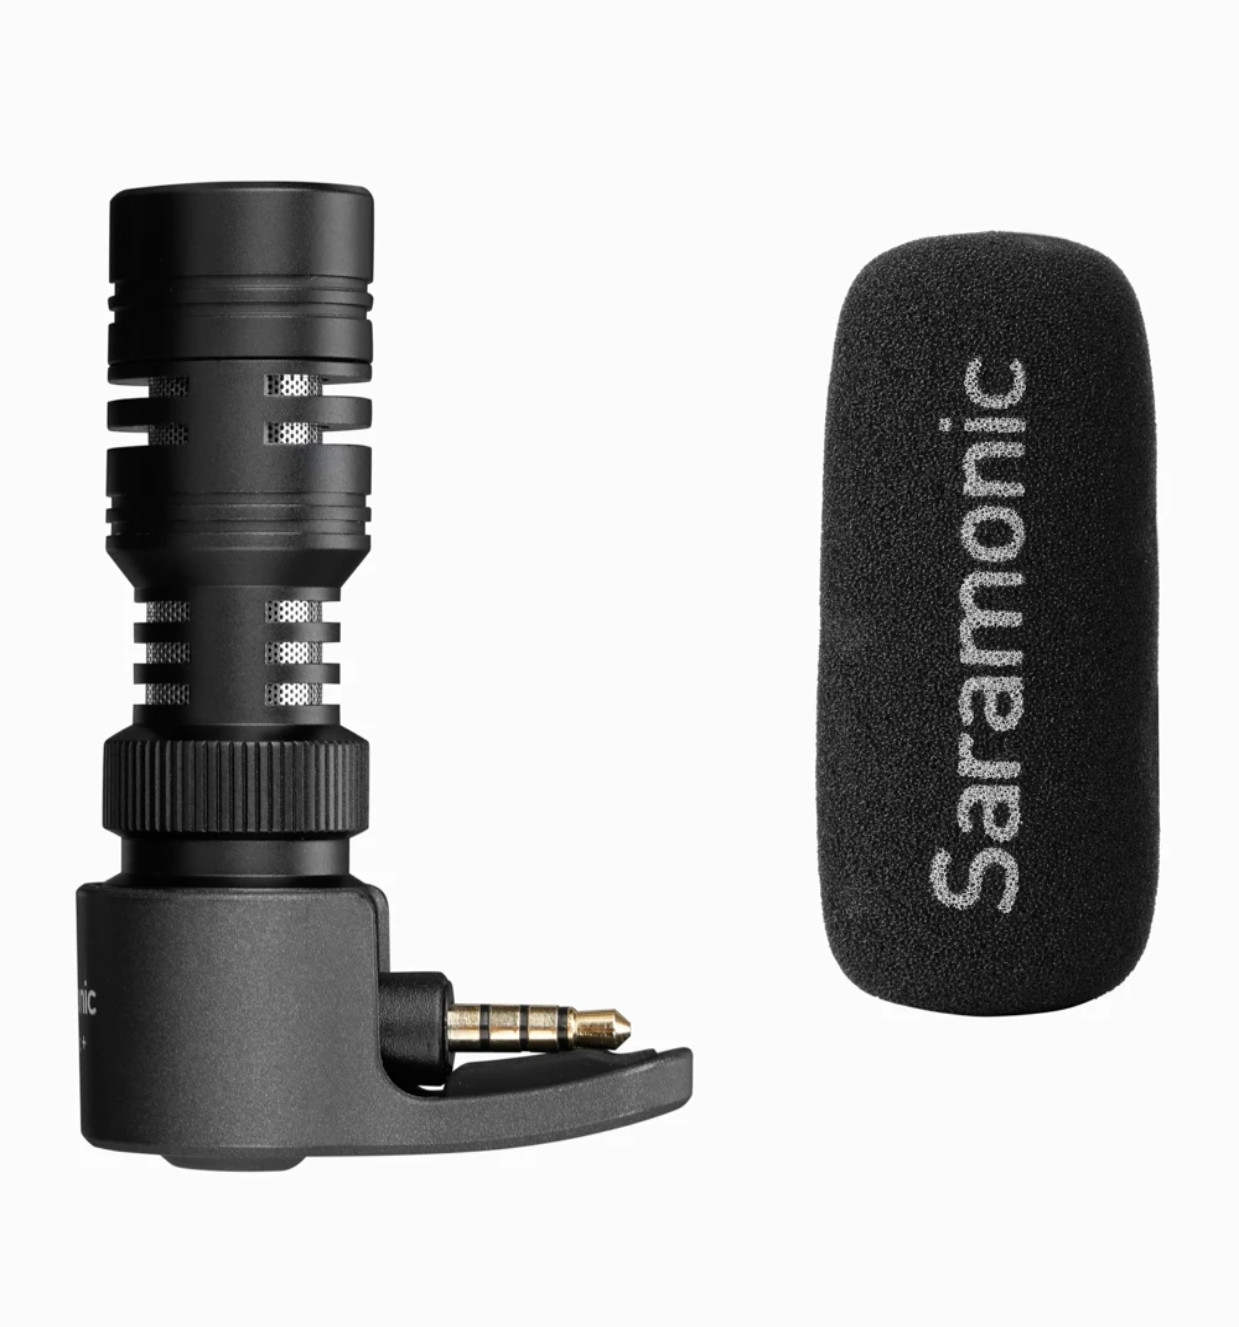 Saramonic SmartMic+ Flexible Microphone